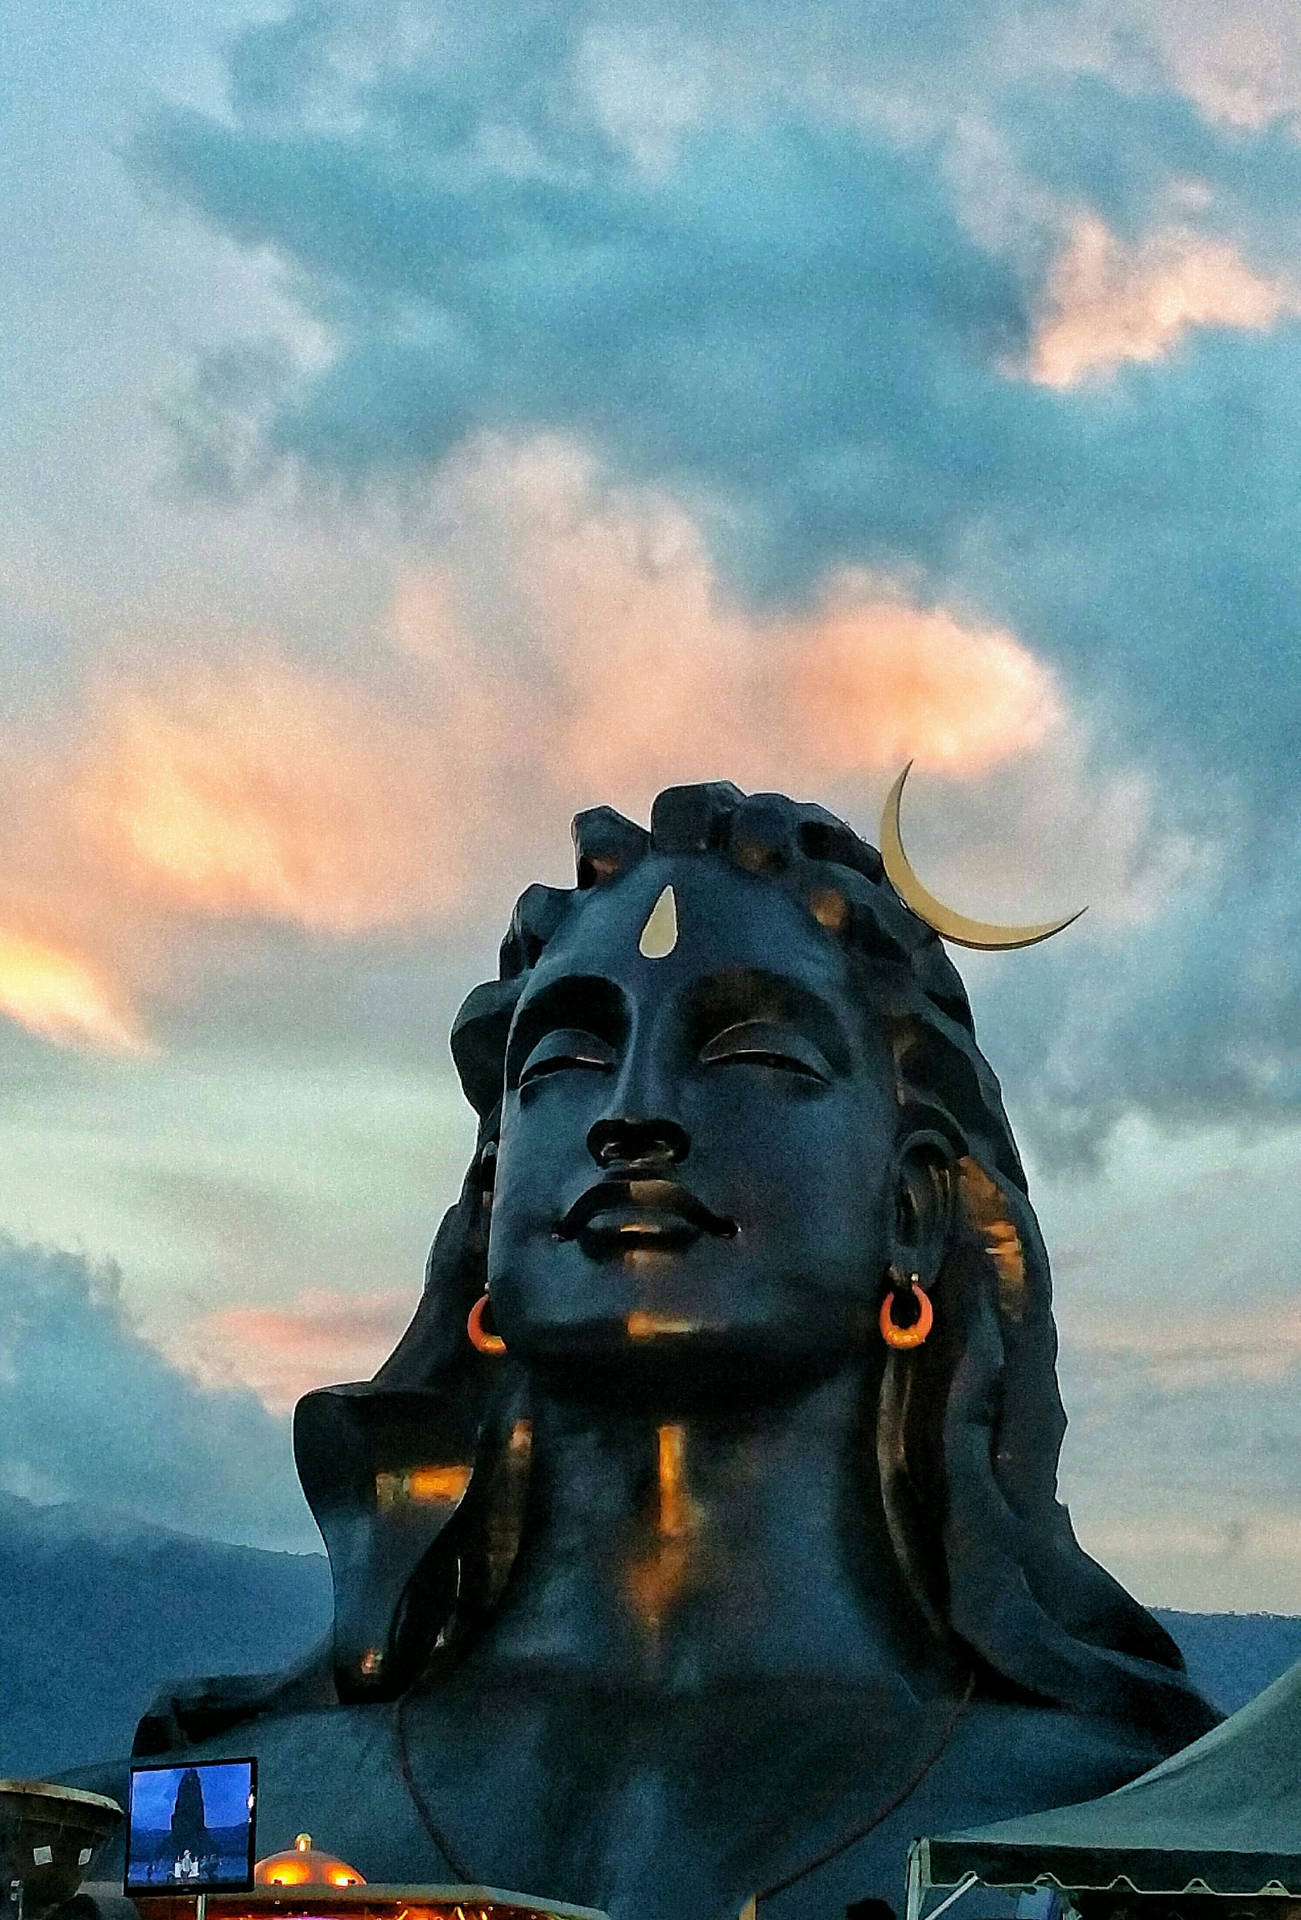 Bholenath Hd Maha Shiva Adiyogi Statue India